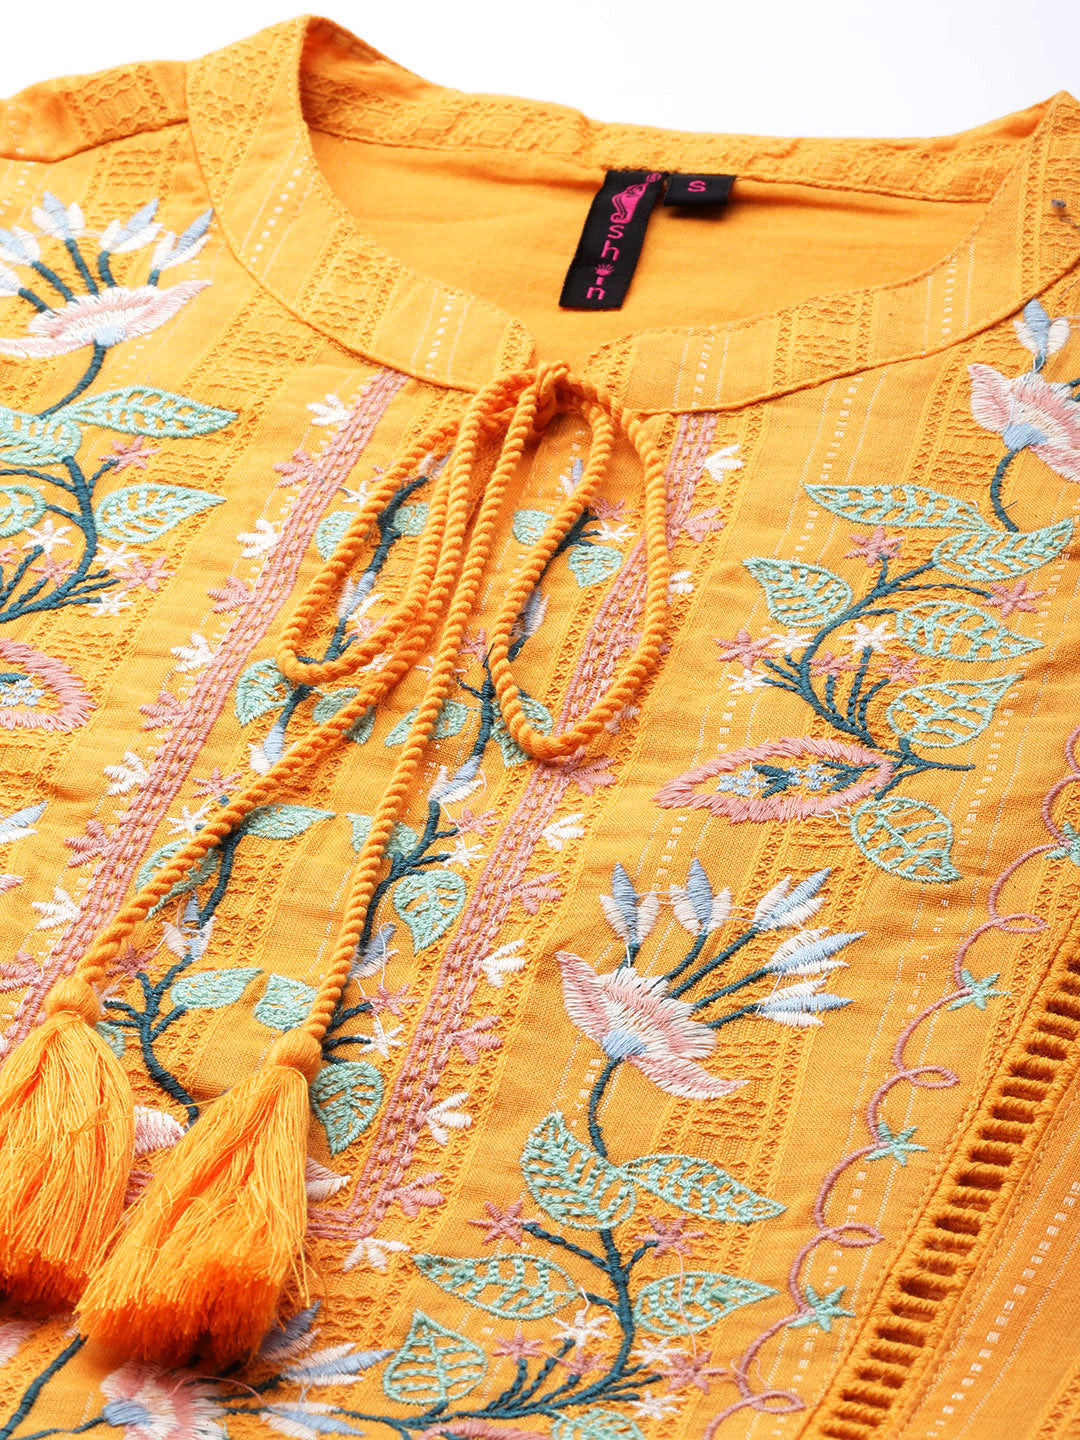 Ishin Women's Mustard Embroidered A-Line Dress